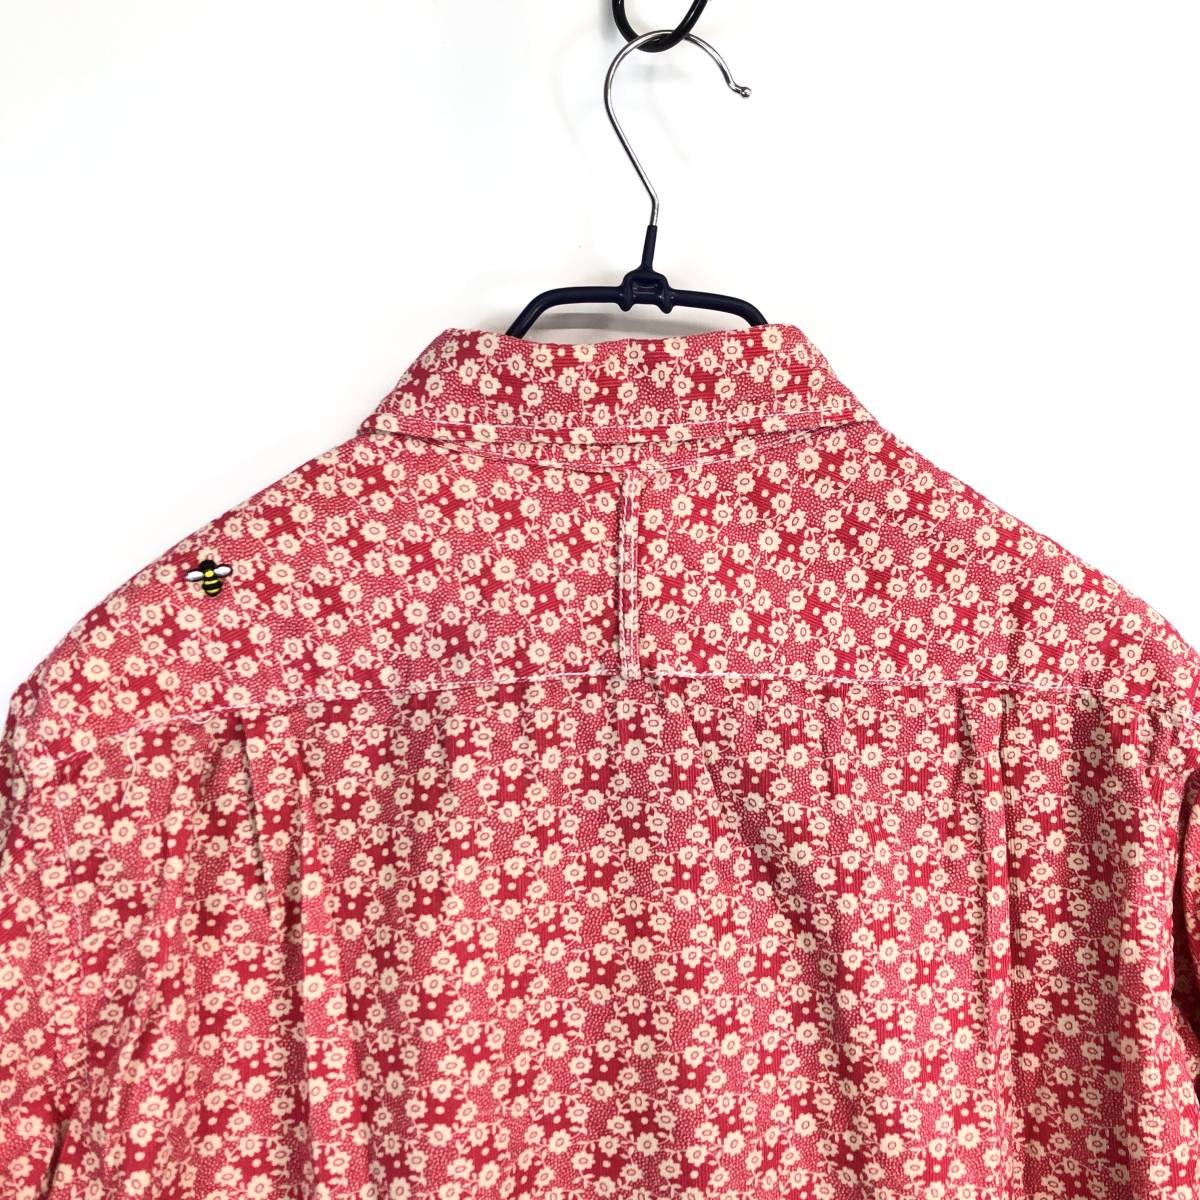 Jipijapa ヒピハパ コーデュロイシャツ 花柄 赤系 3サイズ 日本製 JP041208-02